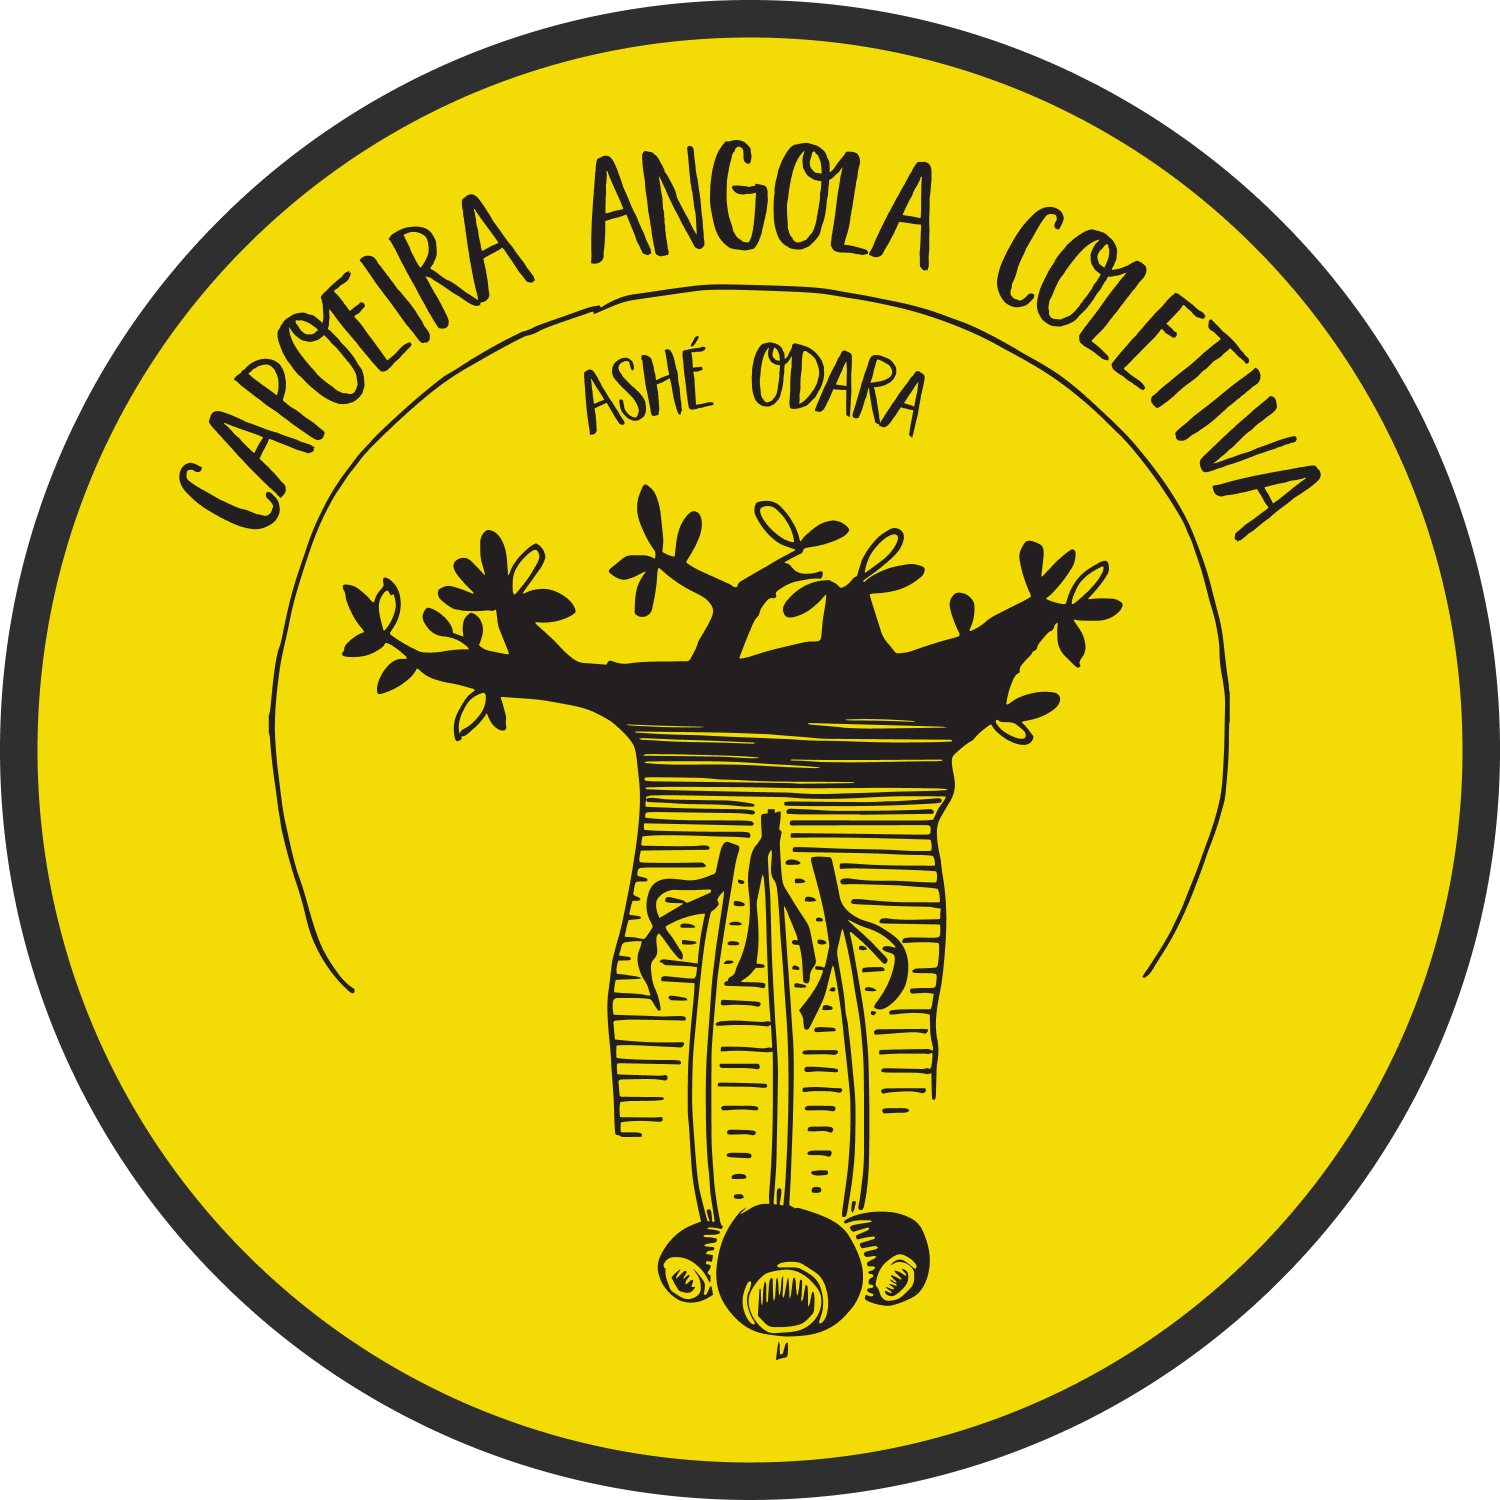 Capoeira Angola Bern